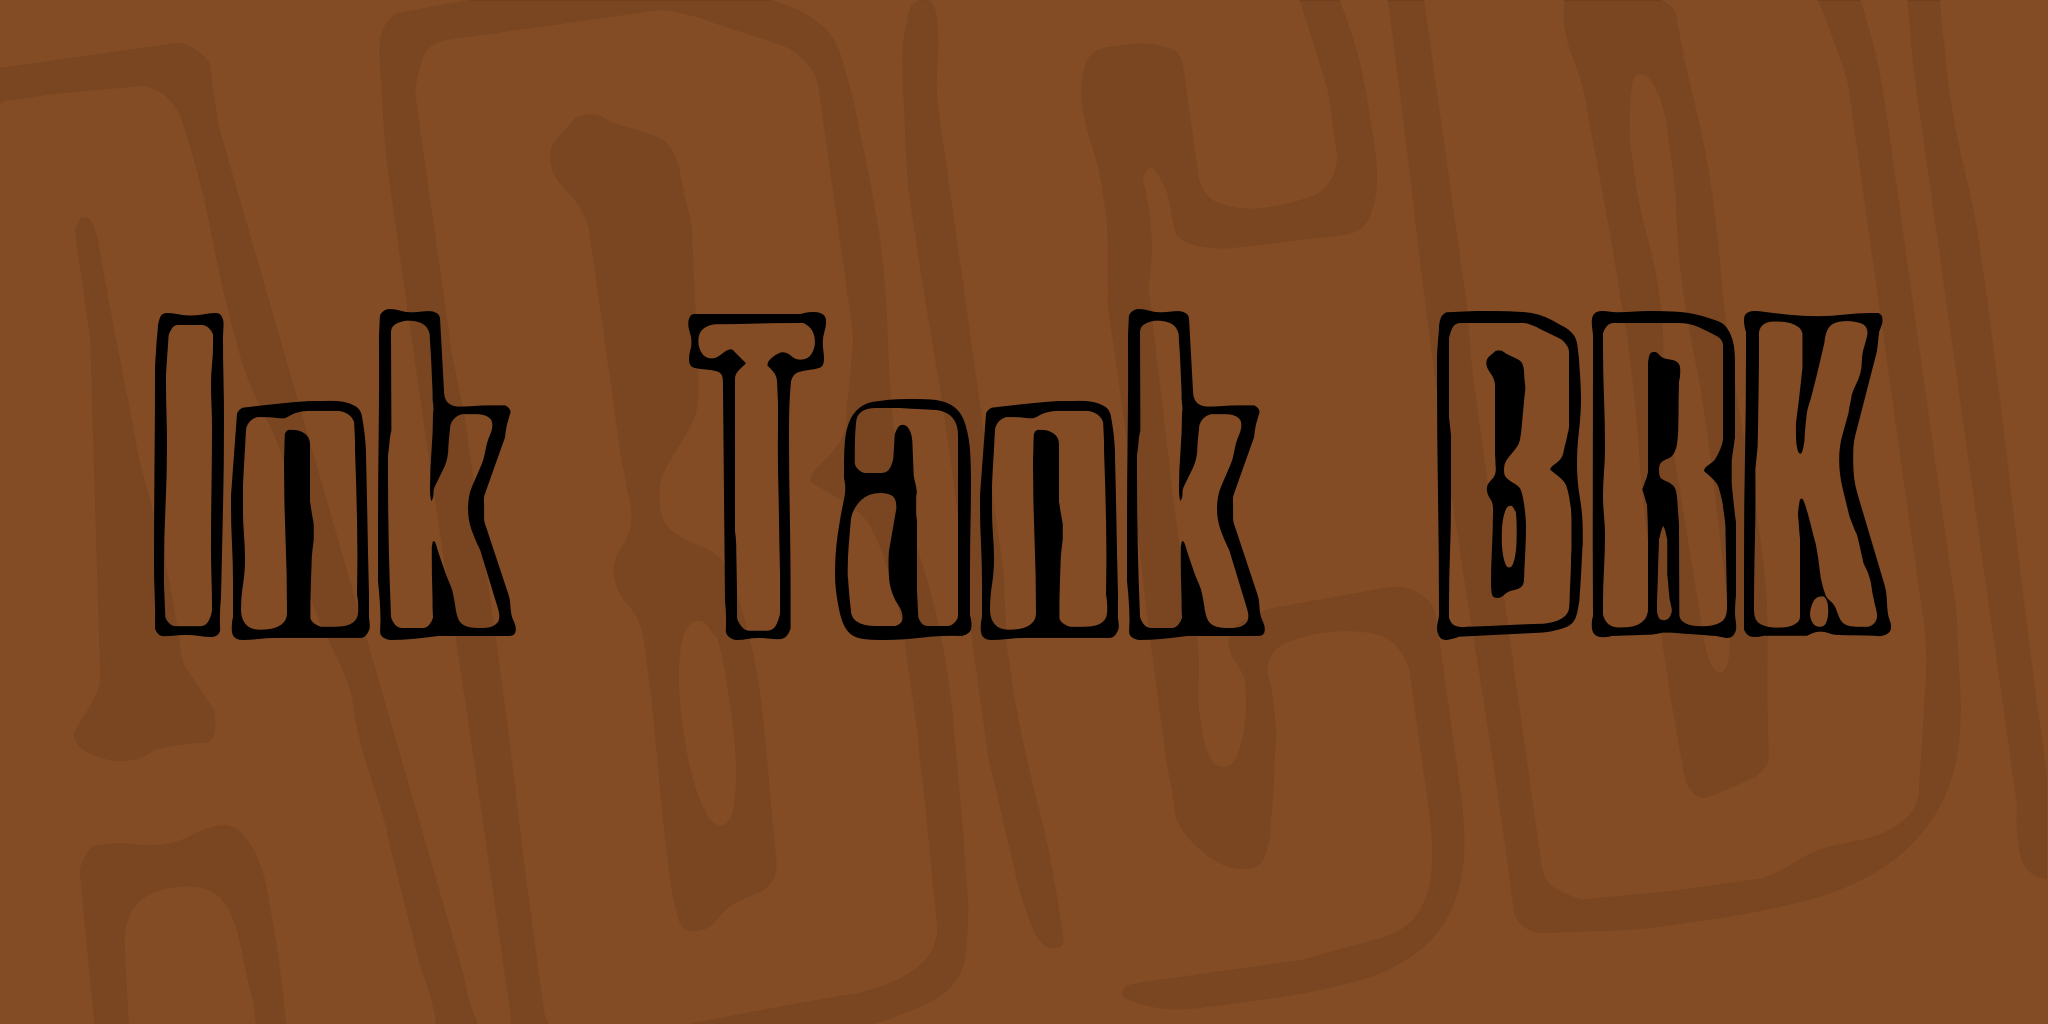 Ink Tank Brk